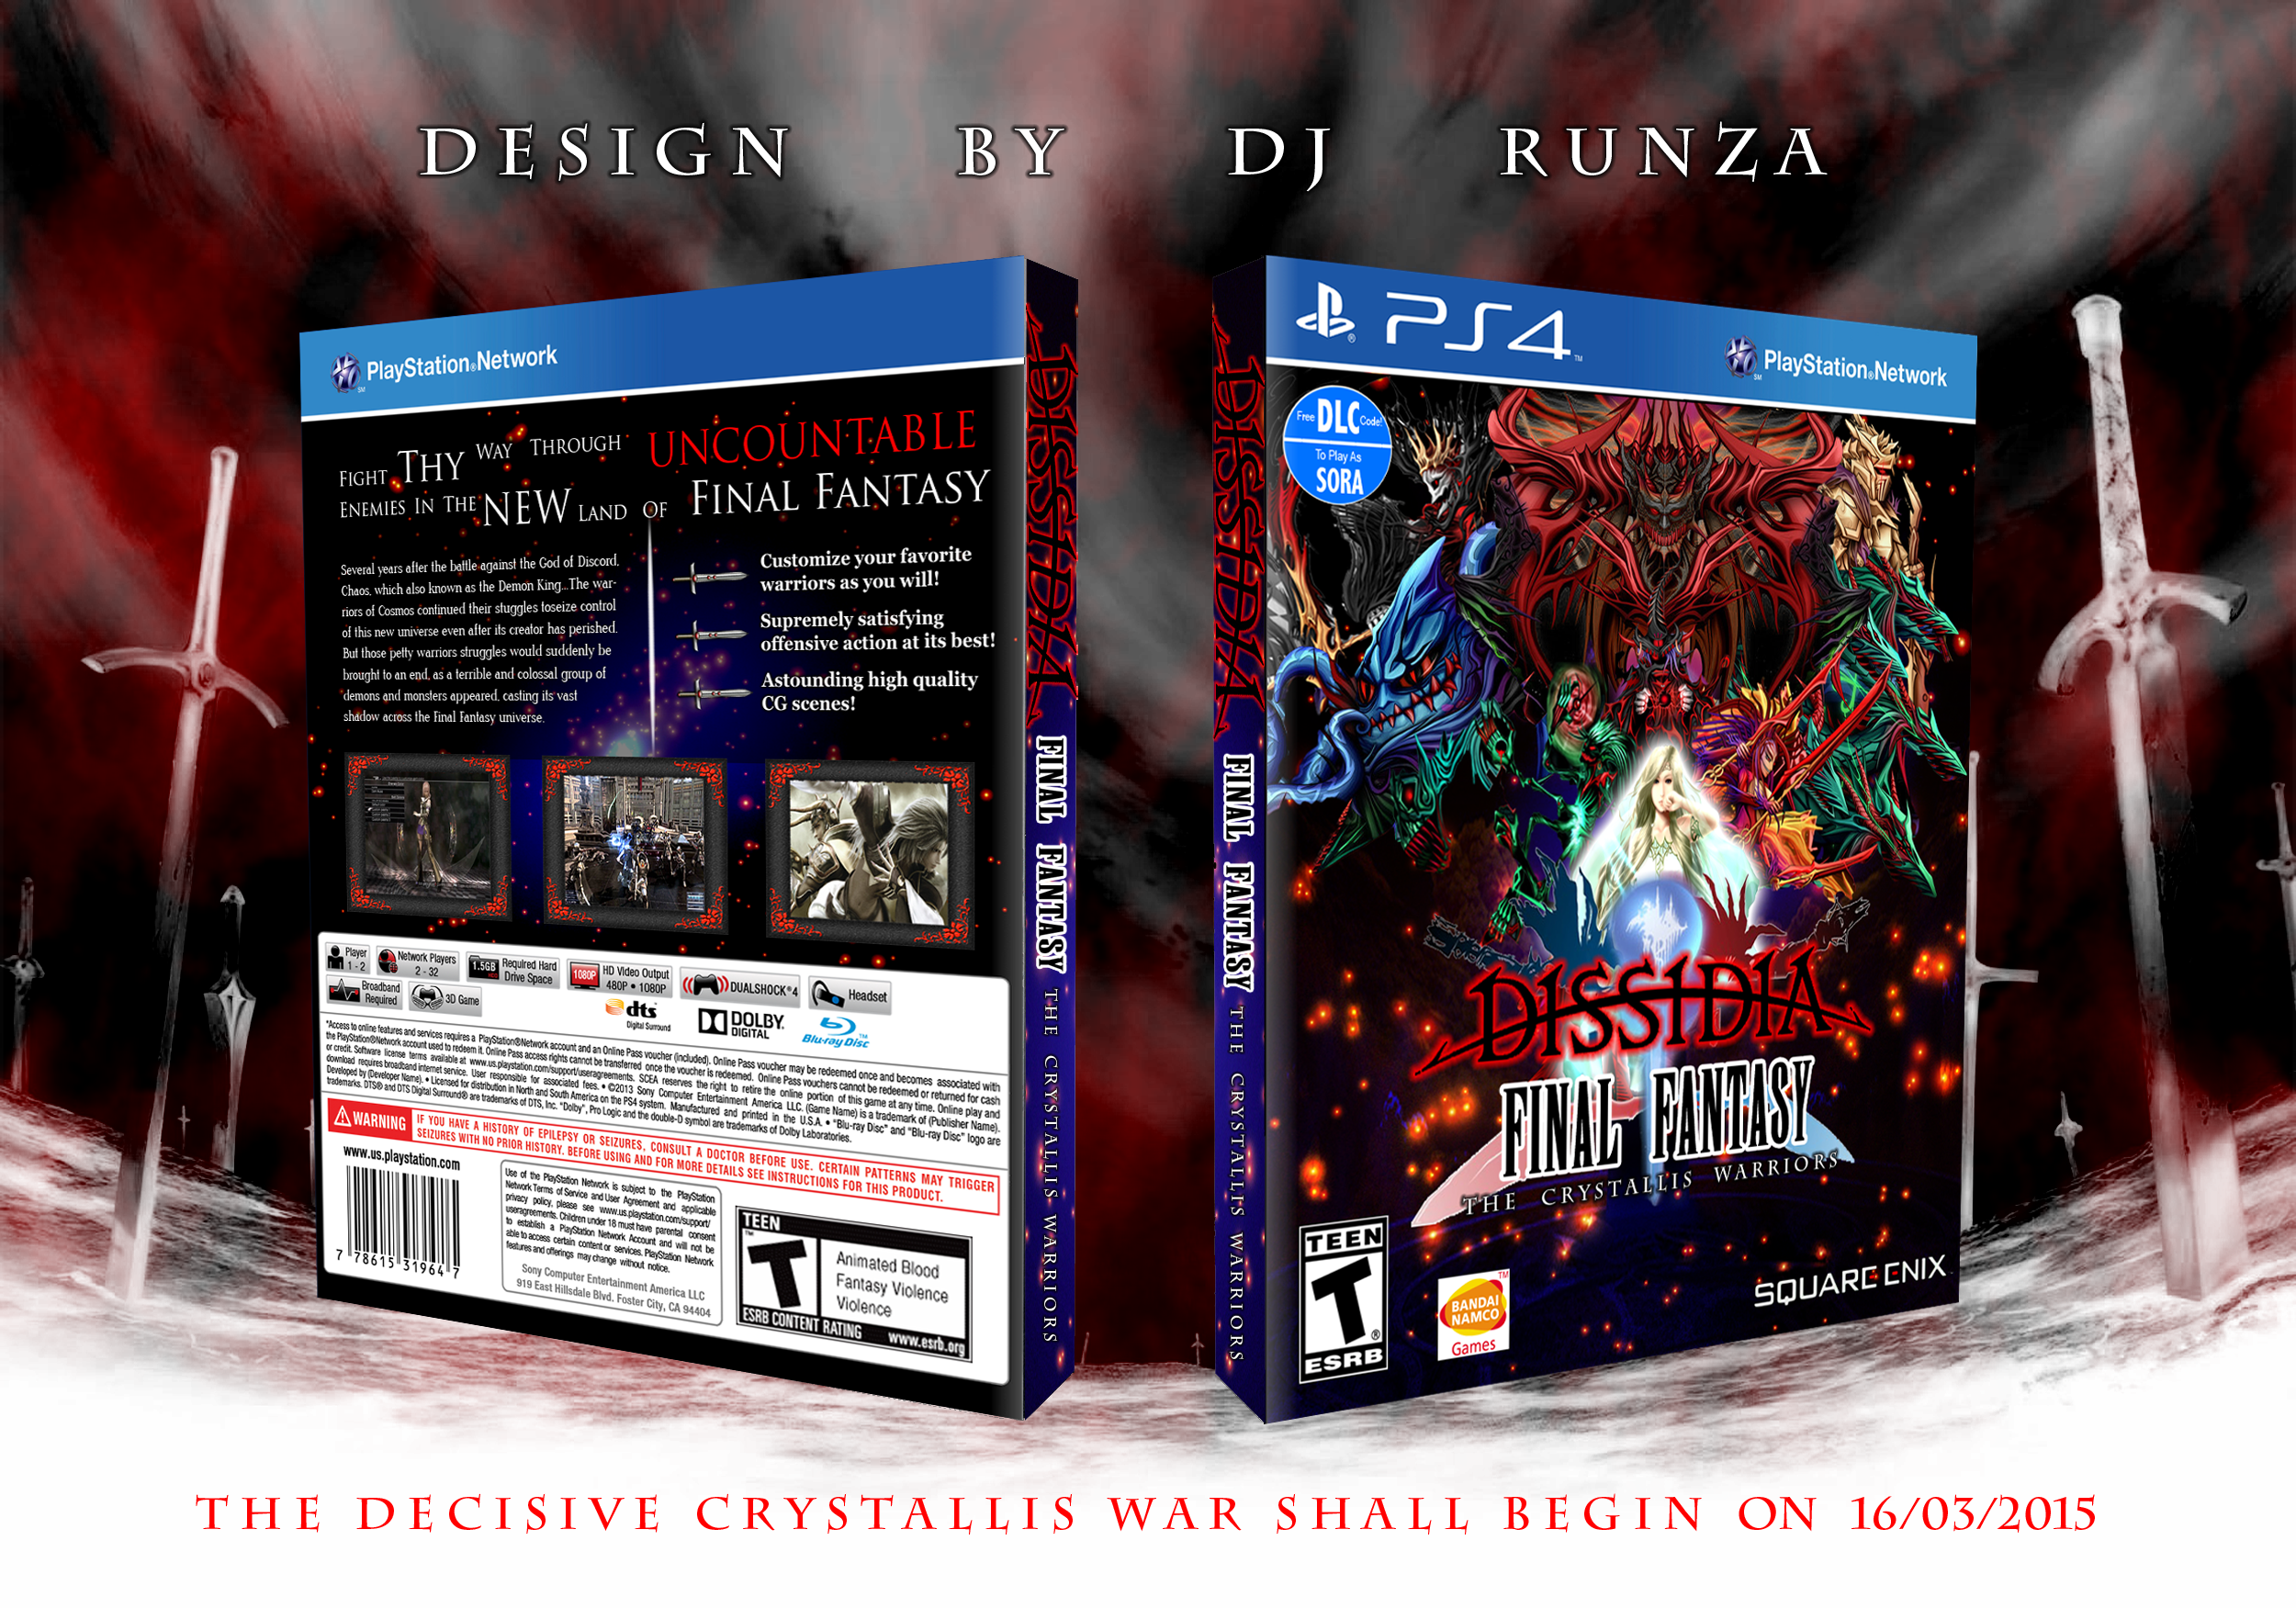 Dissidia Final Fantasy: TheCrystallisWarriors box cover